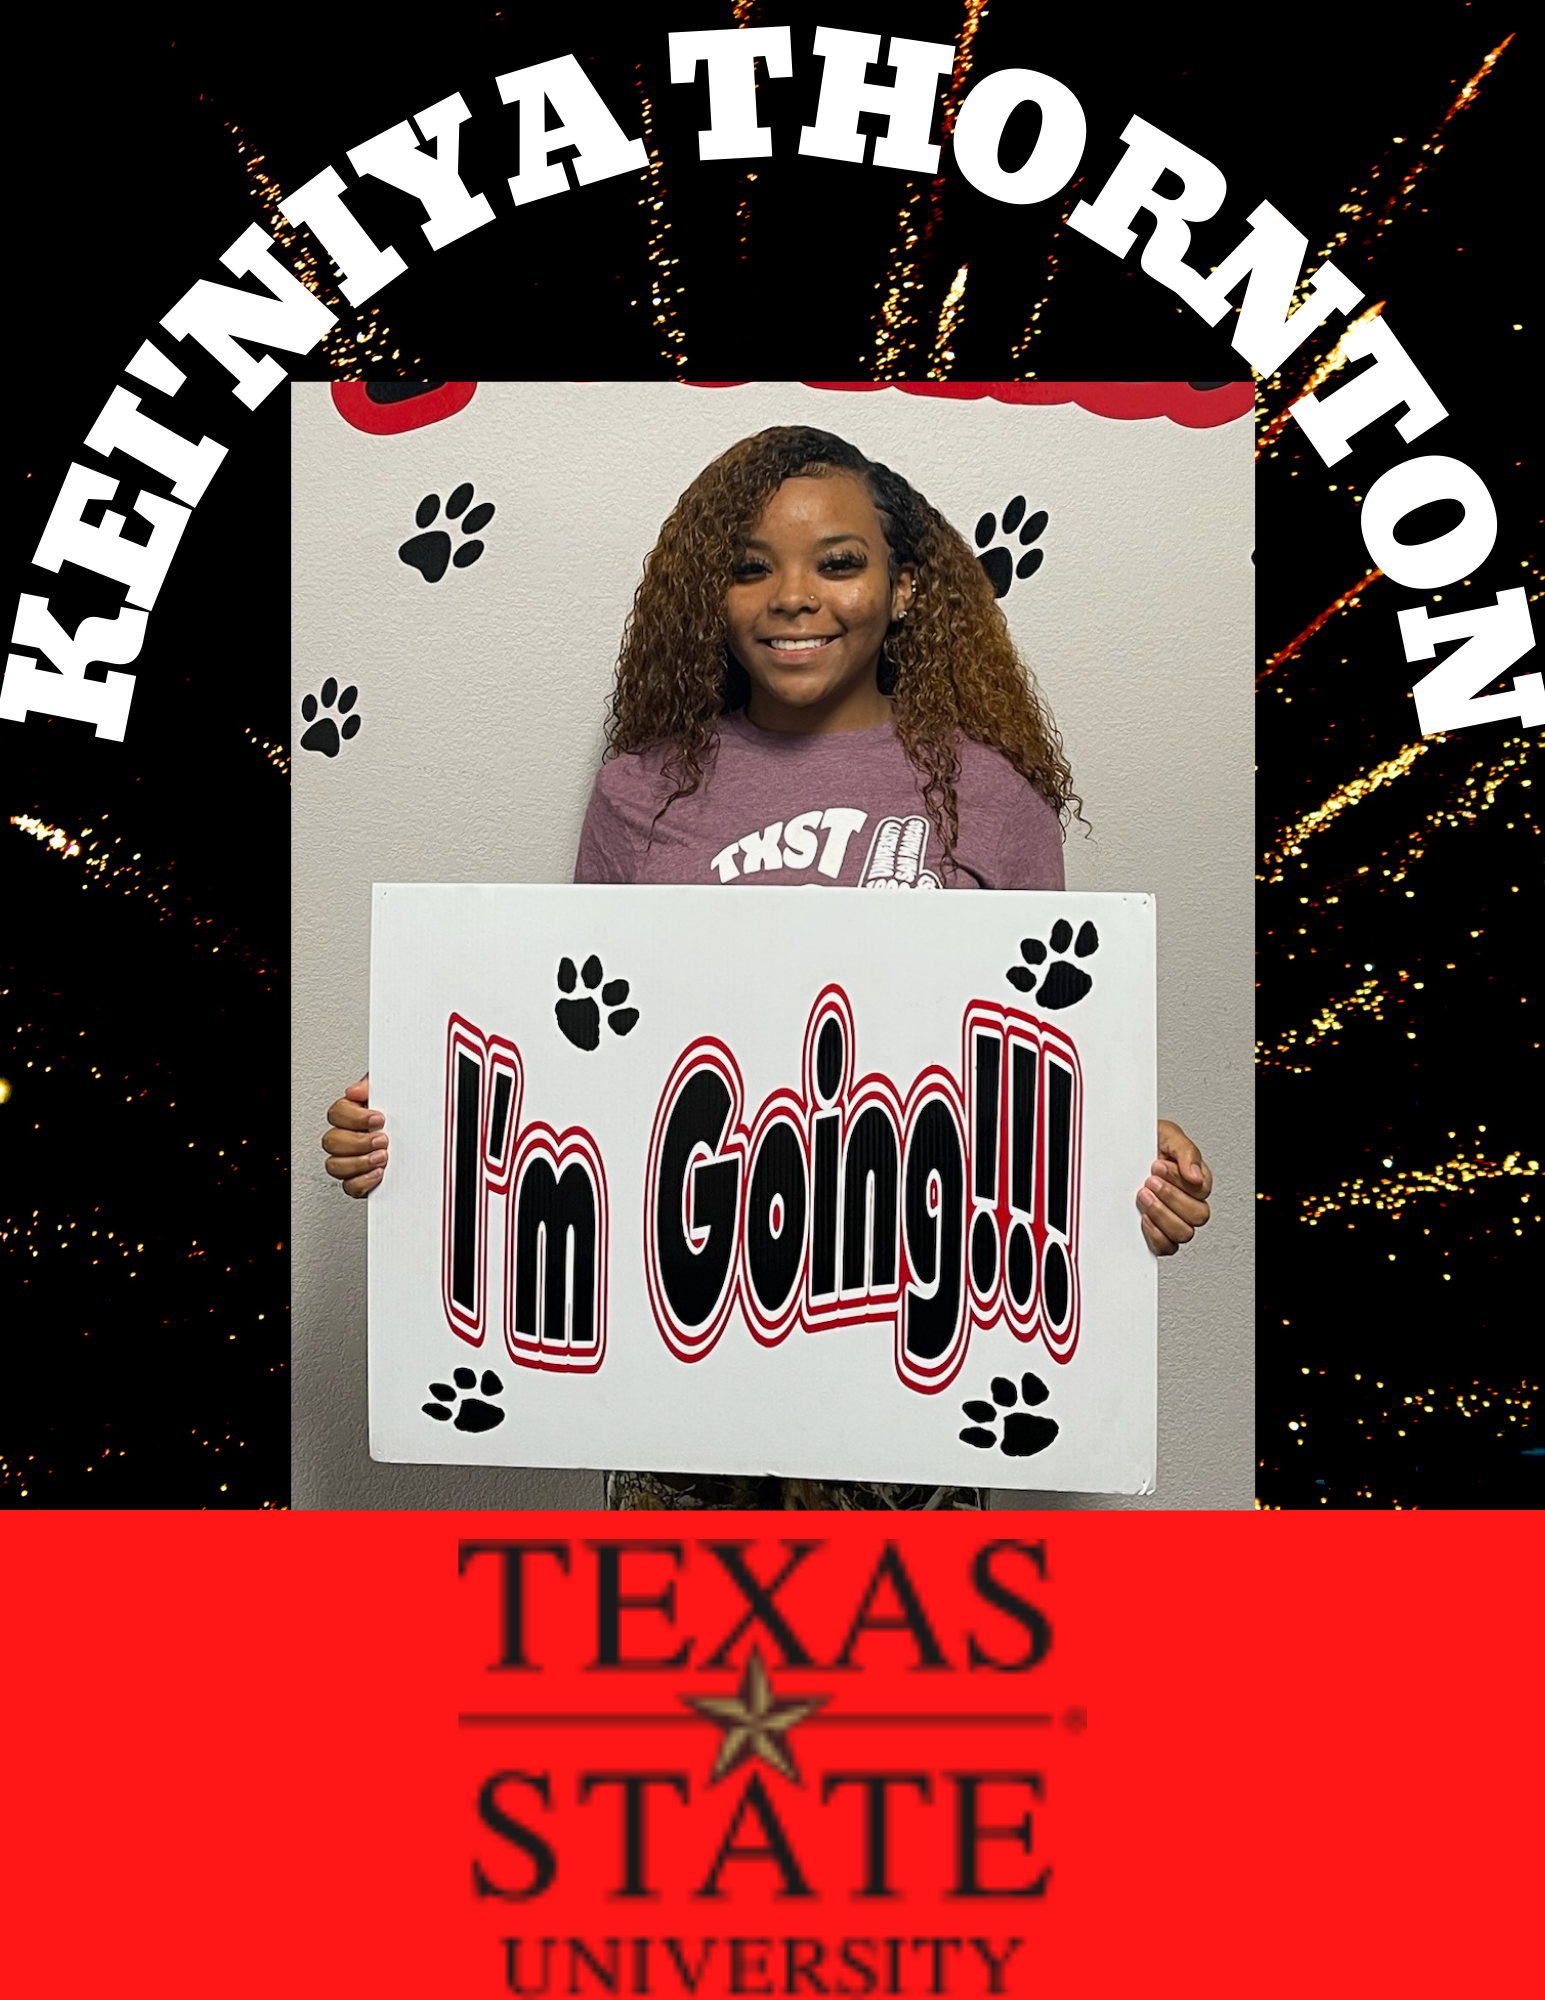 Kei'Niya Thornton - I'm Going! - Texas State University